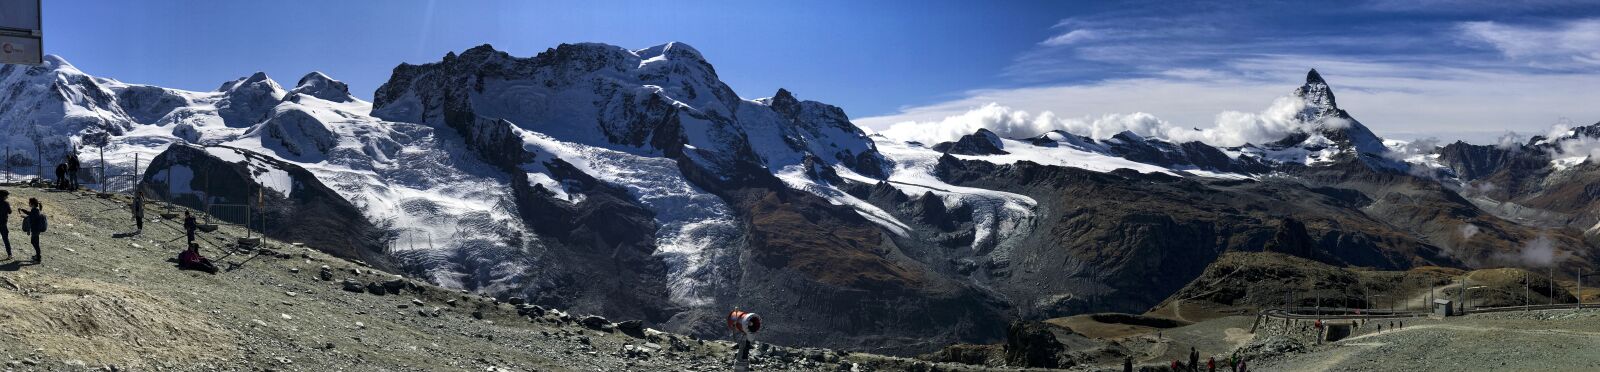 Apple iPhone 7 Plus sample photo. Matterhorn, mountains, switzerland photography